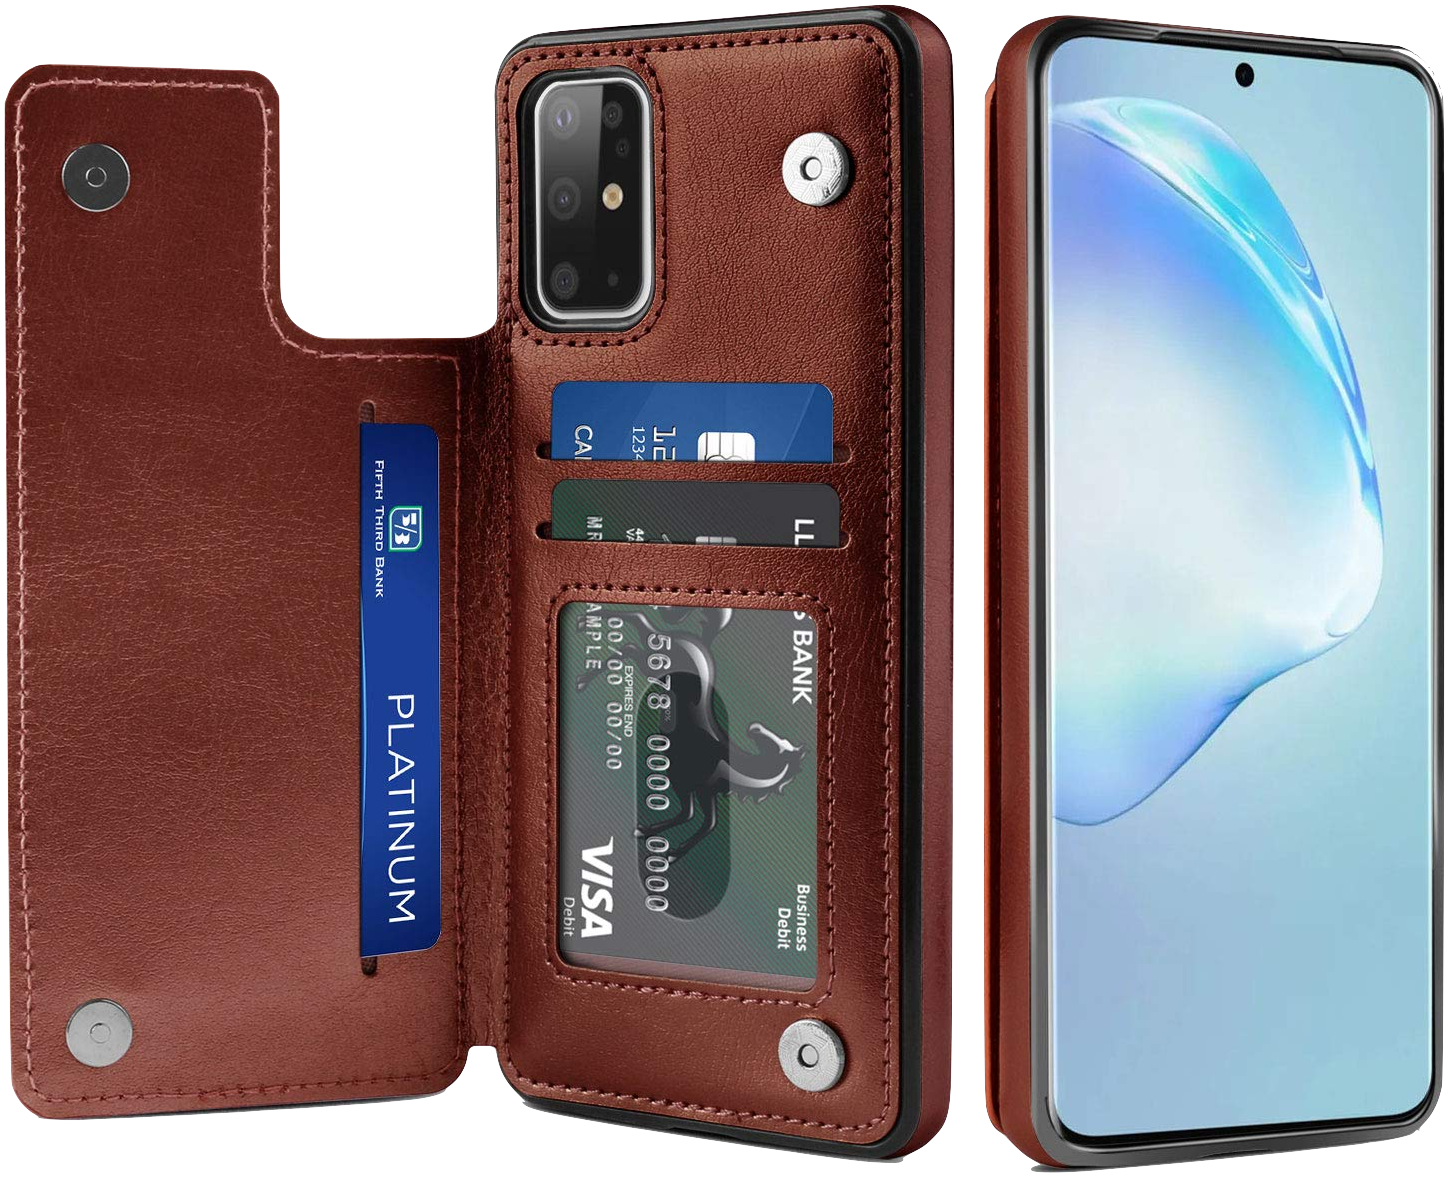 Venoro Pu Leather Wallet Case Galaxy S20 Plus